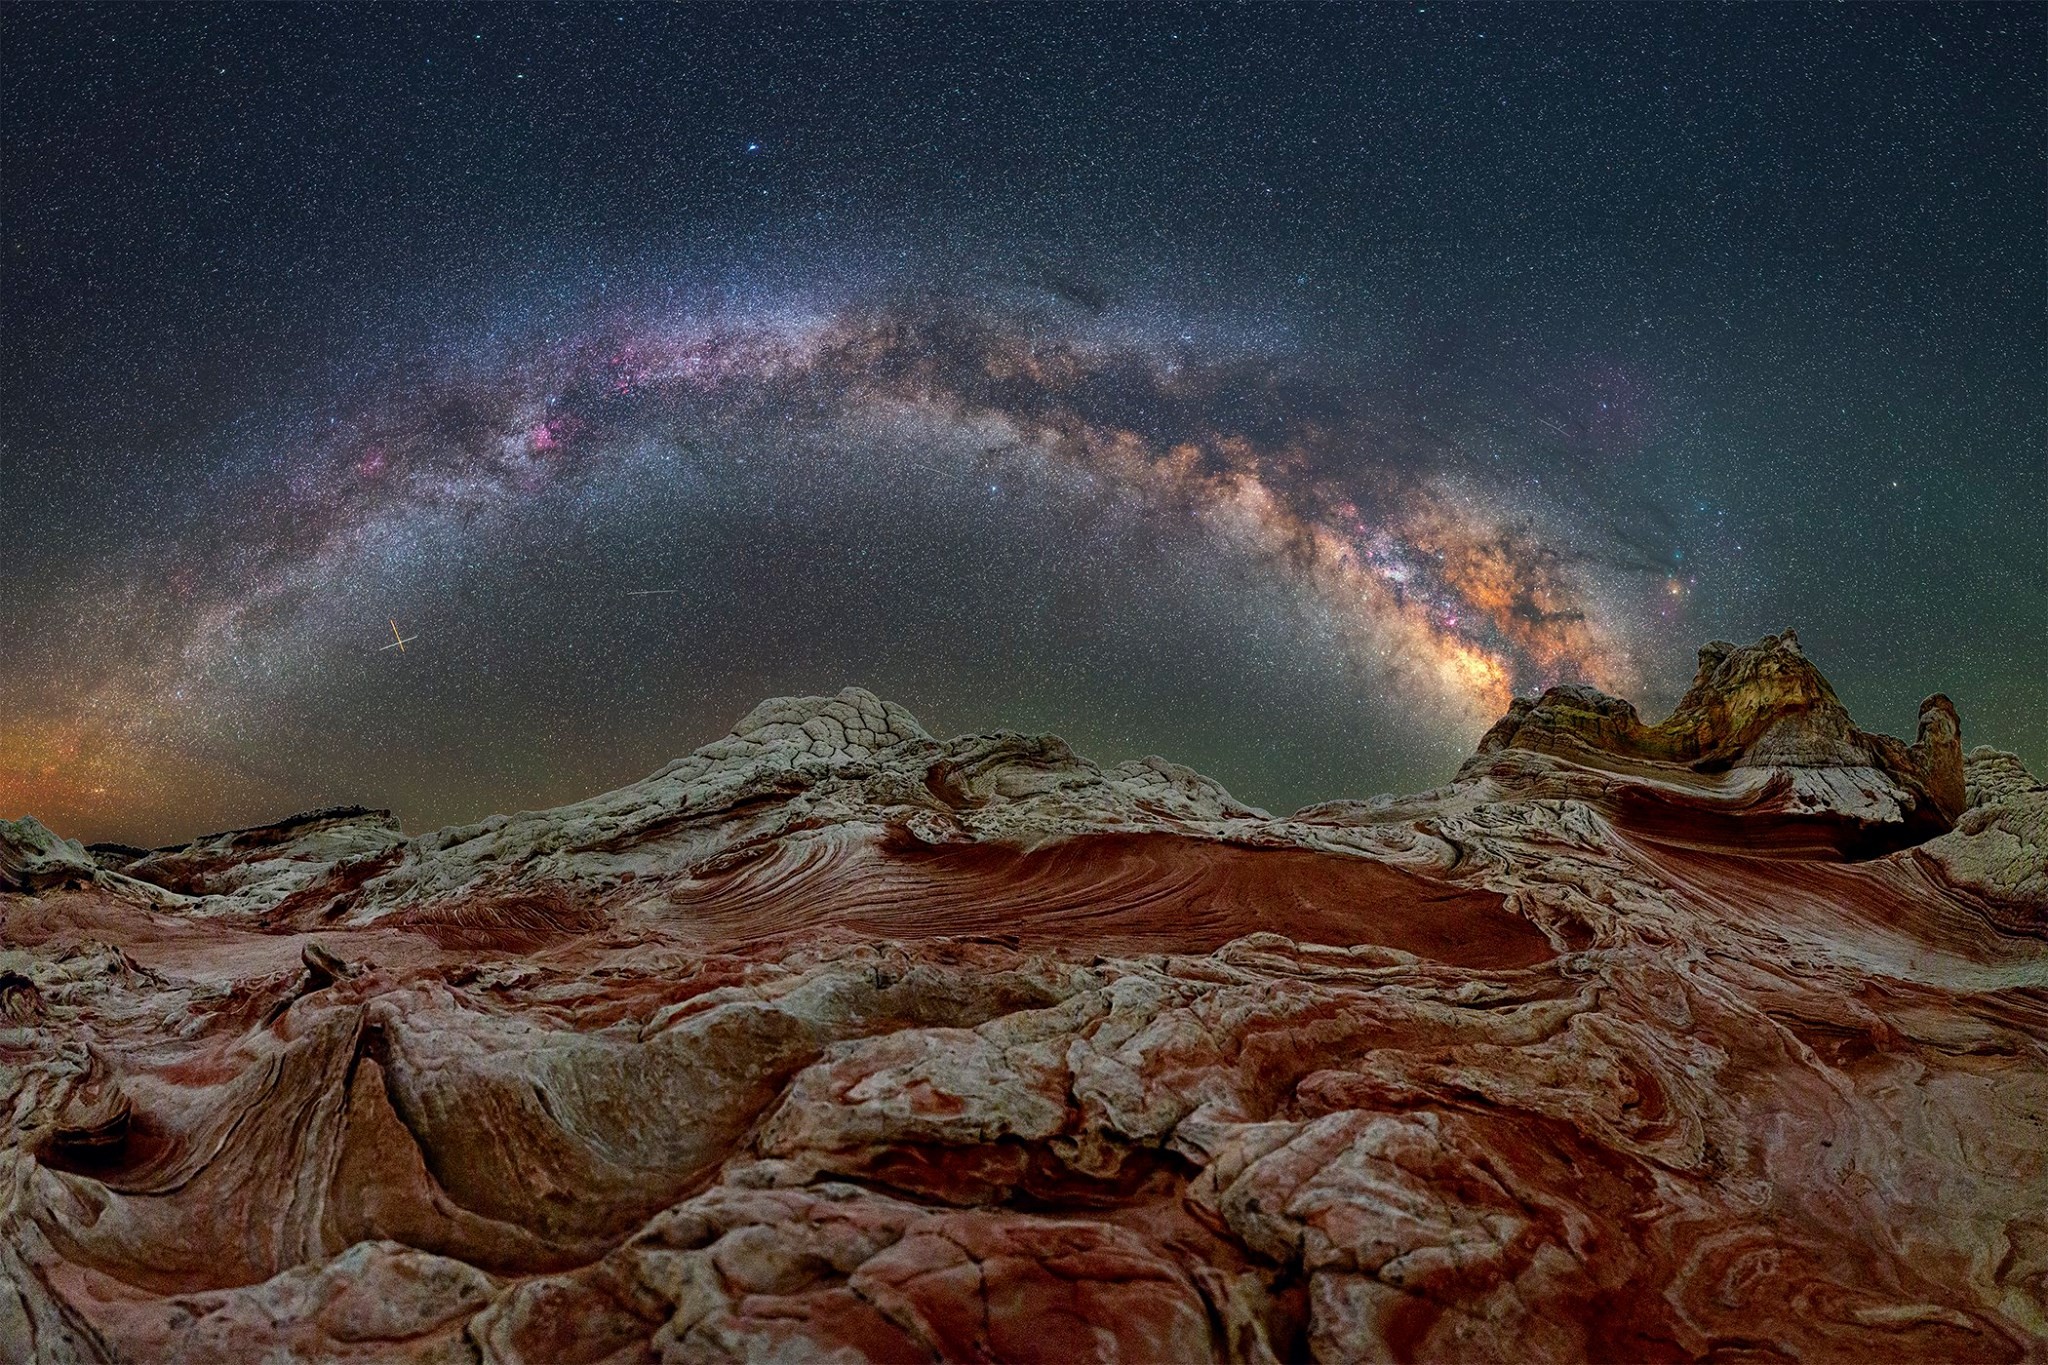 General 2048x1365 nature landscape Milky Way night stars clear sky cliff Arizona USA long exposure space sky rocks